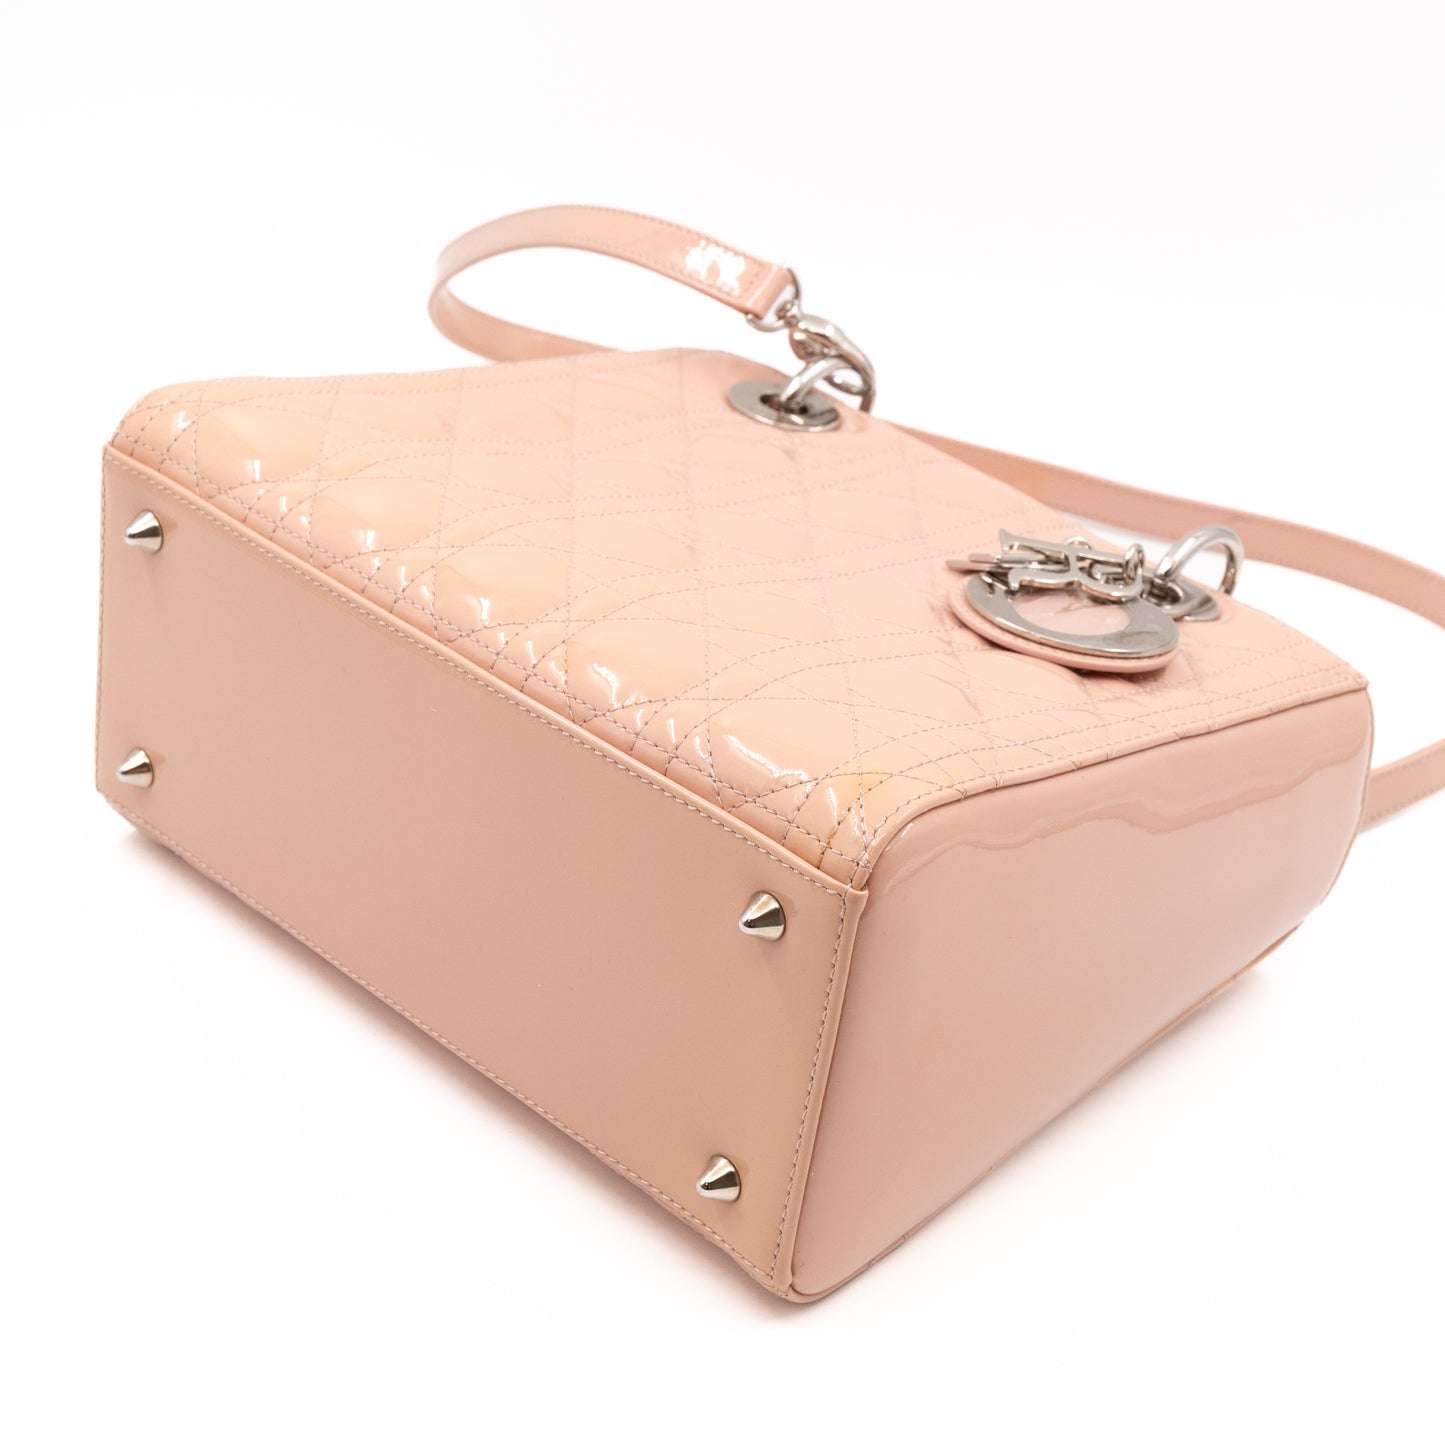 Lady Dior Medium Light Pink Patent Leather